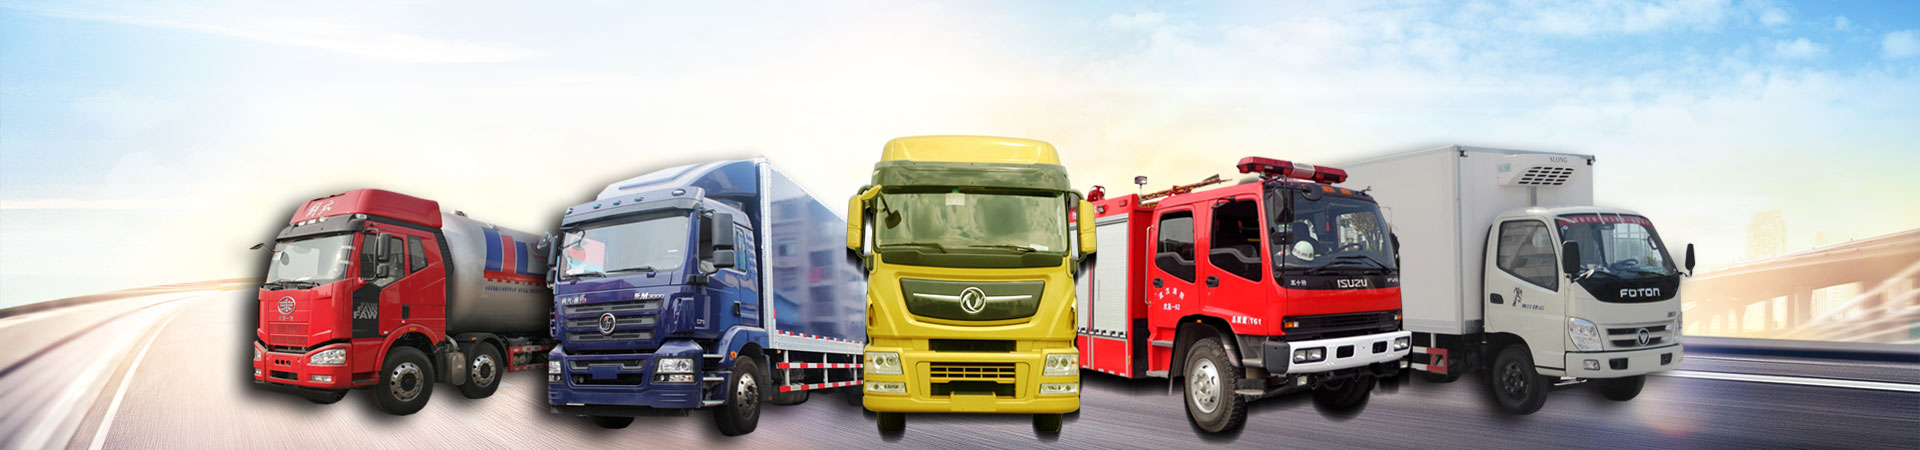 Supplying Truck Solution for Worldwide Customer